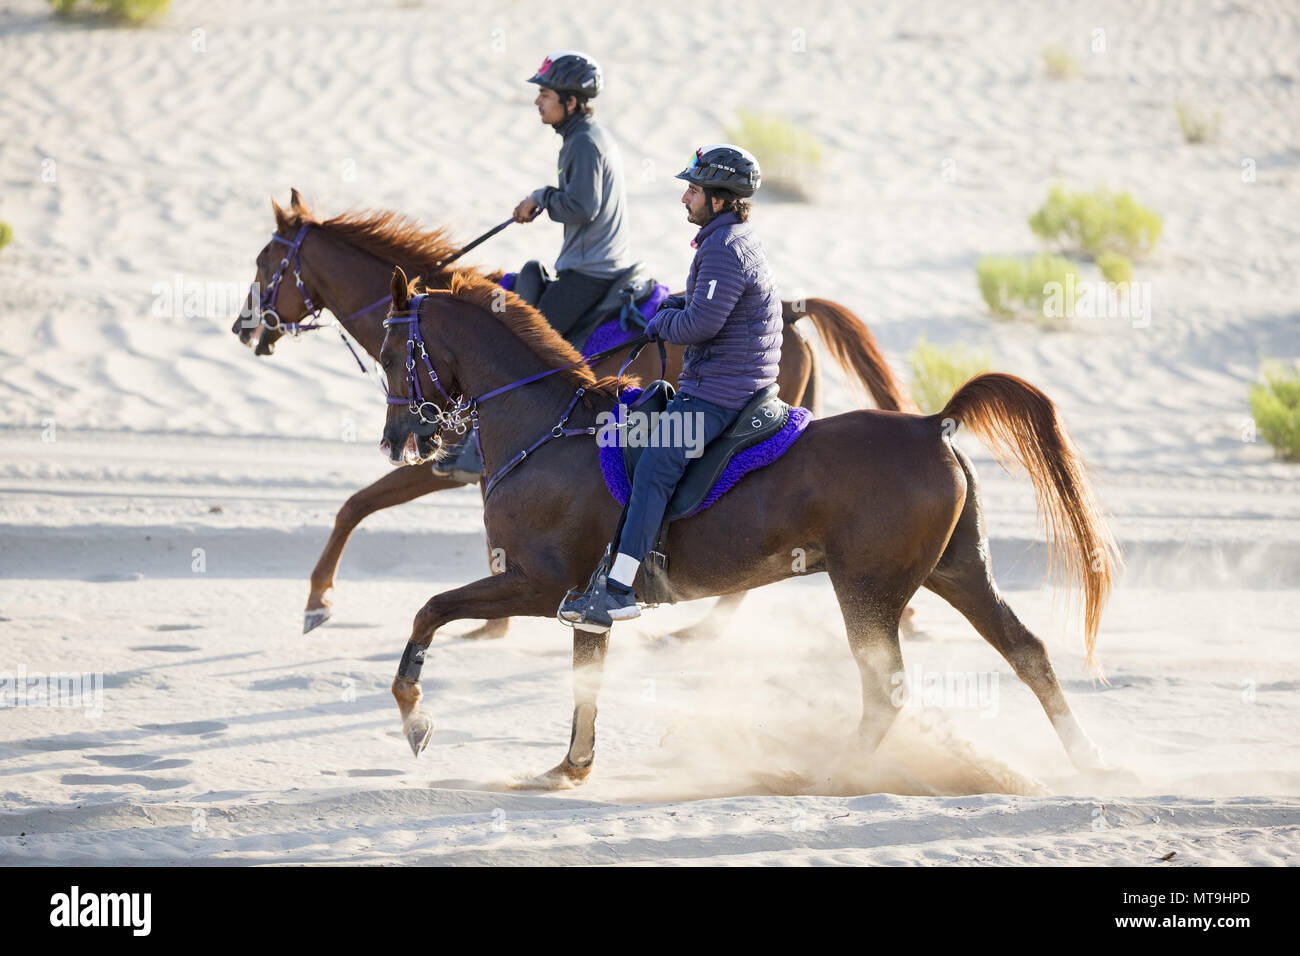 https://c8.alamy.com/comp/MT9HPD/arabian-horse-endurance-riders-galopping-in-the-desert-abu-dhabi-MT9HPD.jpg